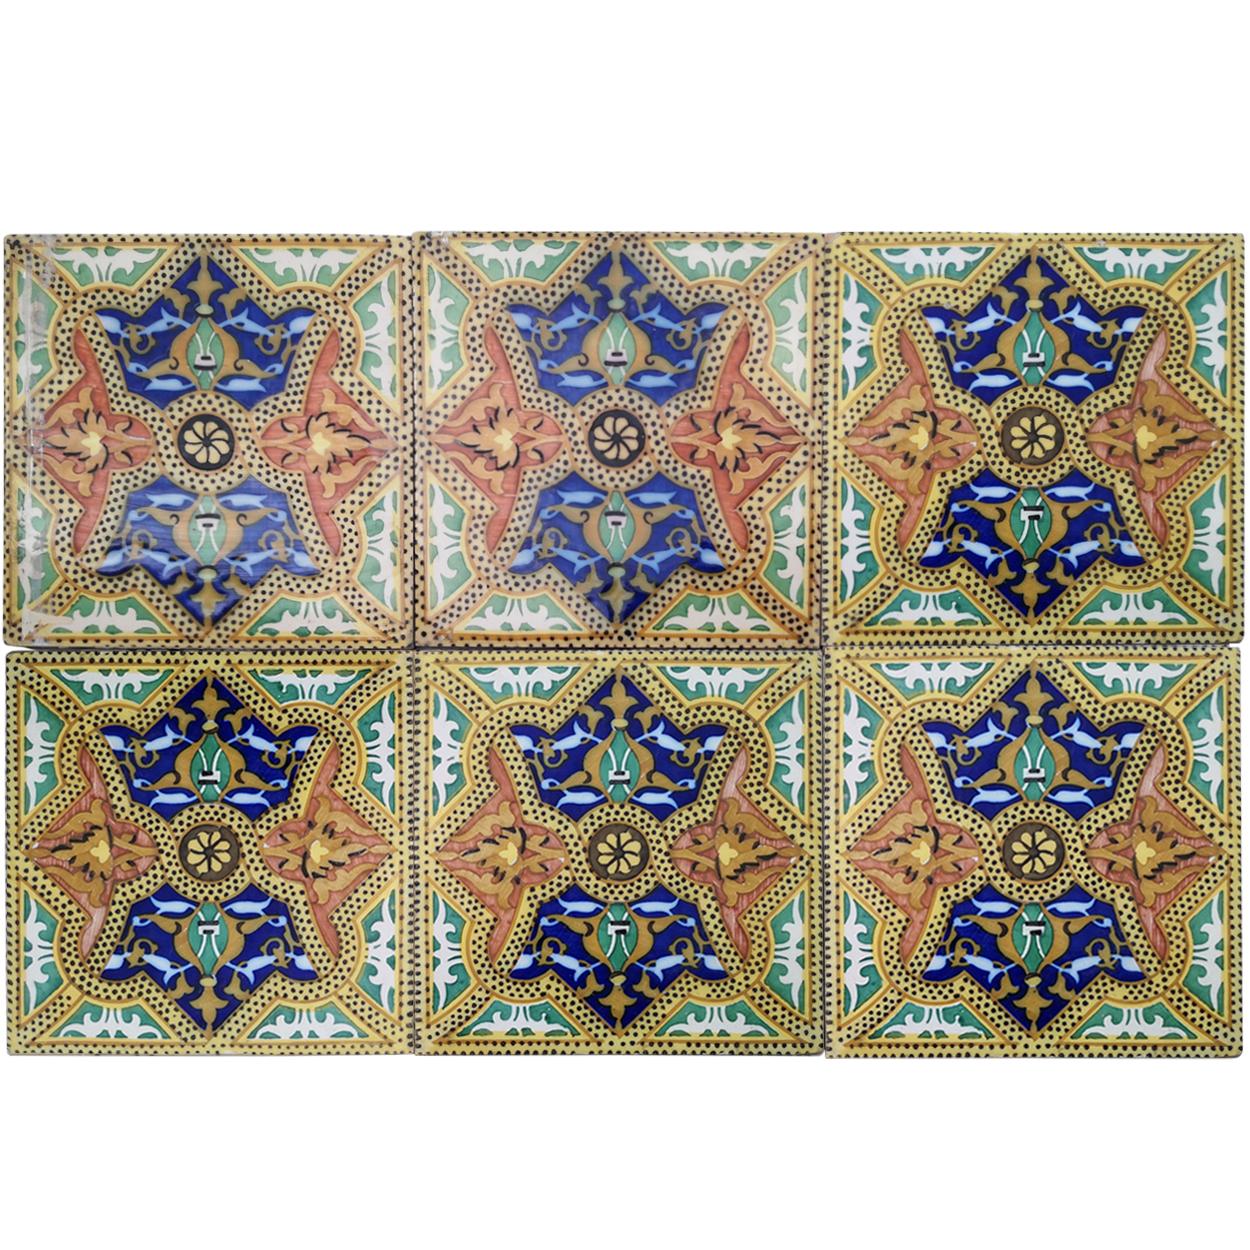 Art Nouveau Set of Unique Antique Six Ceramic Tiles, Onda, Spain Valencia, circa 1900